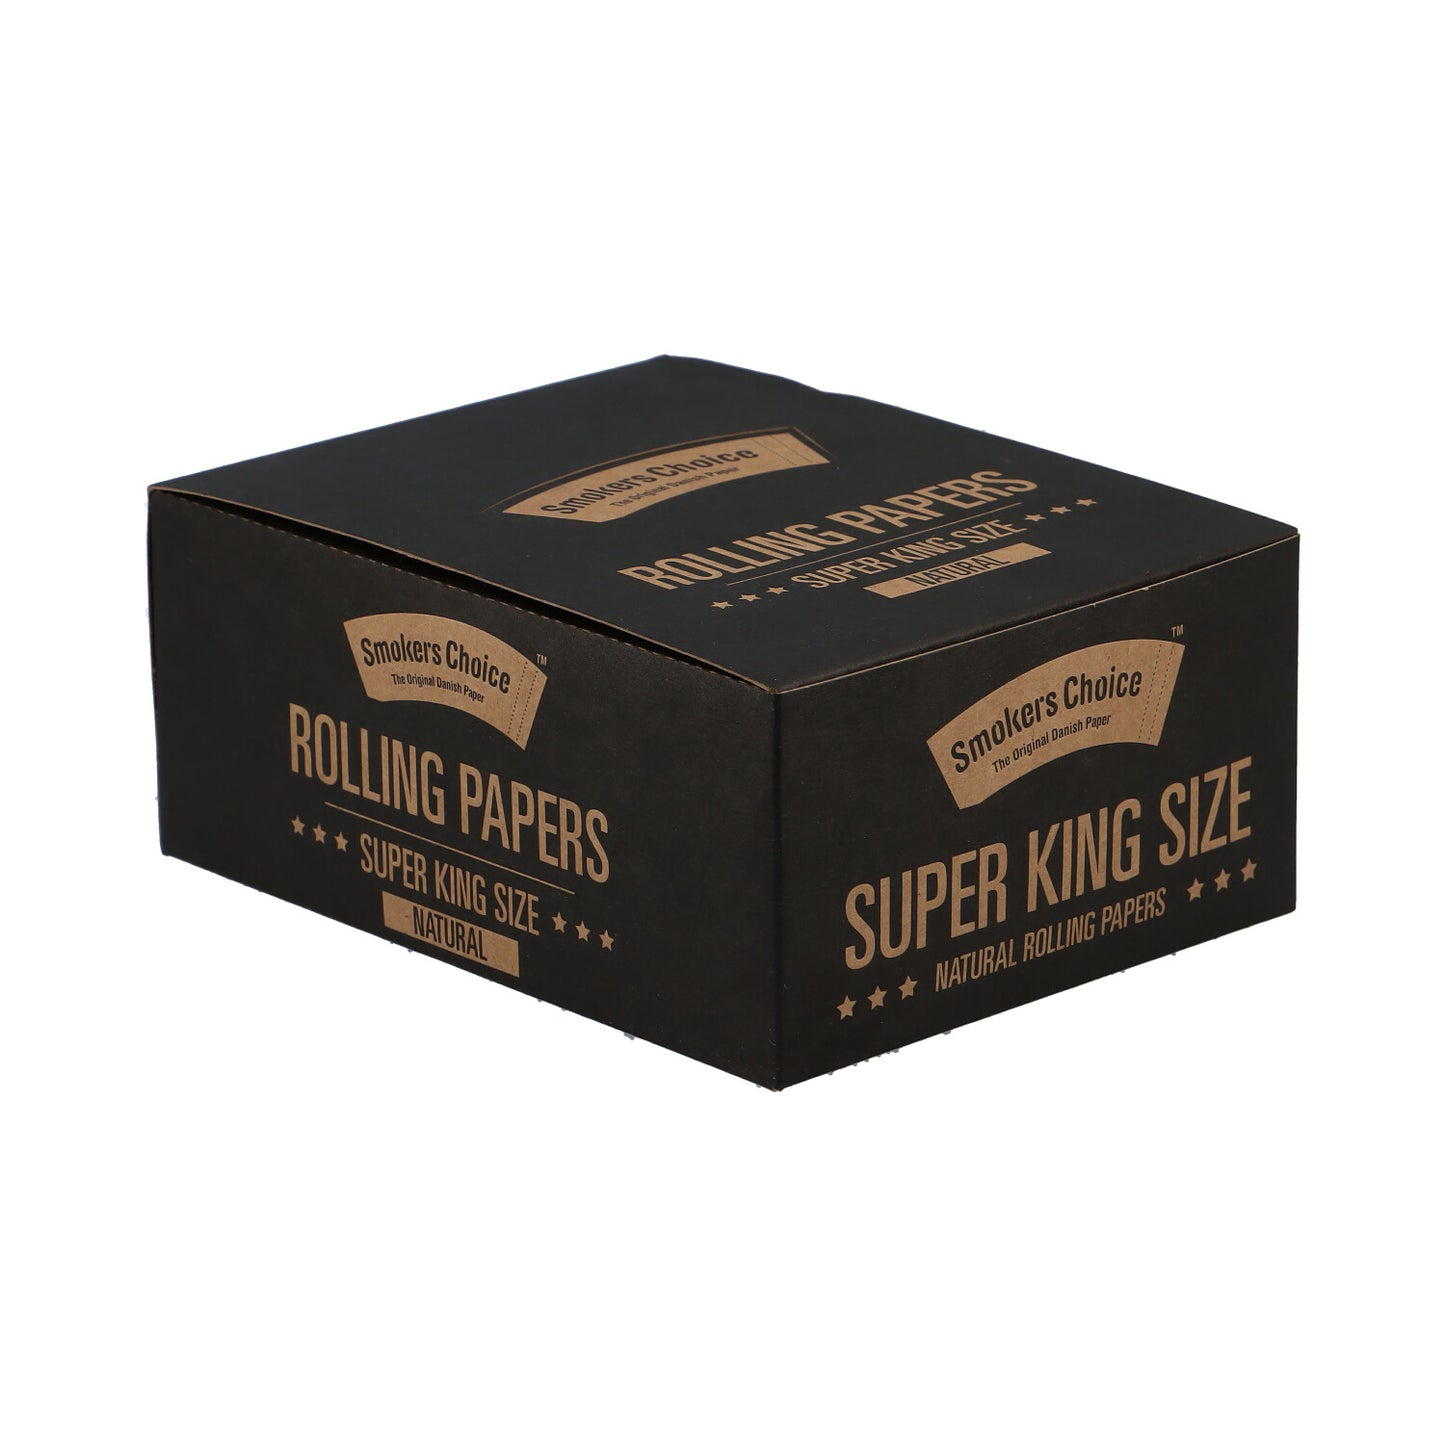 Super King Size Rulle Papir Kasse - Naturlig